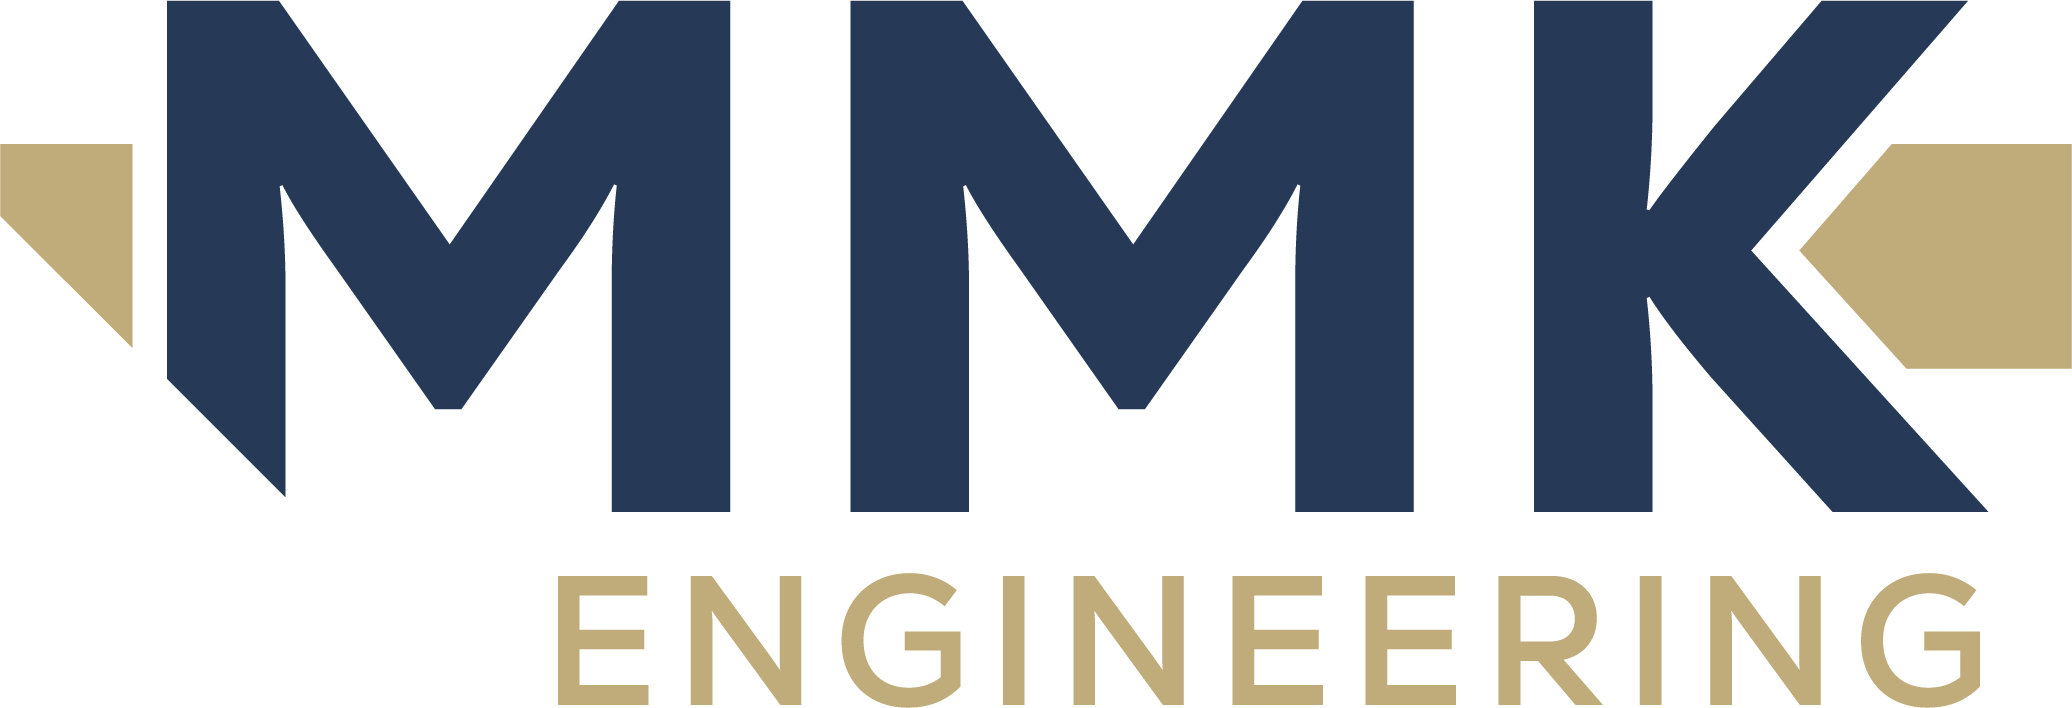 mmk-logo-01